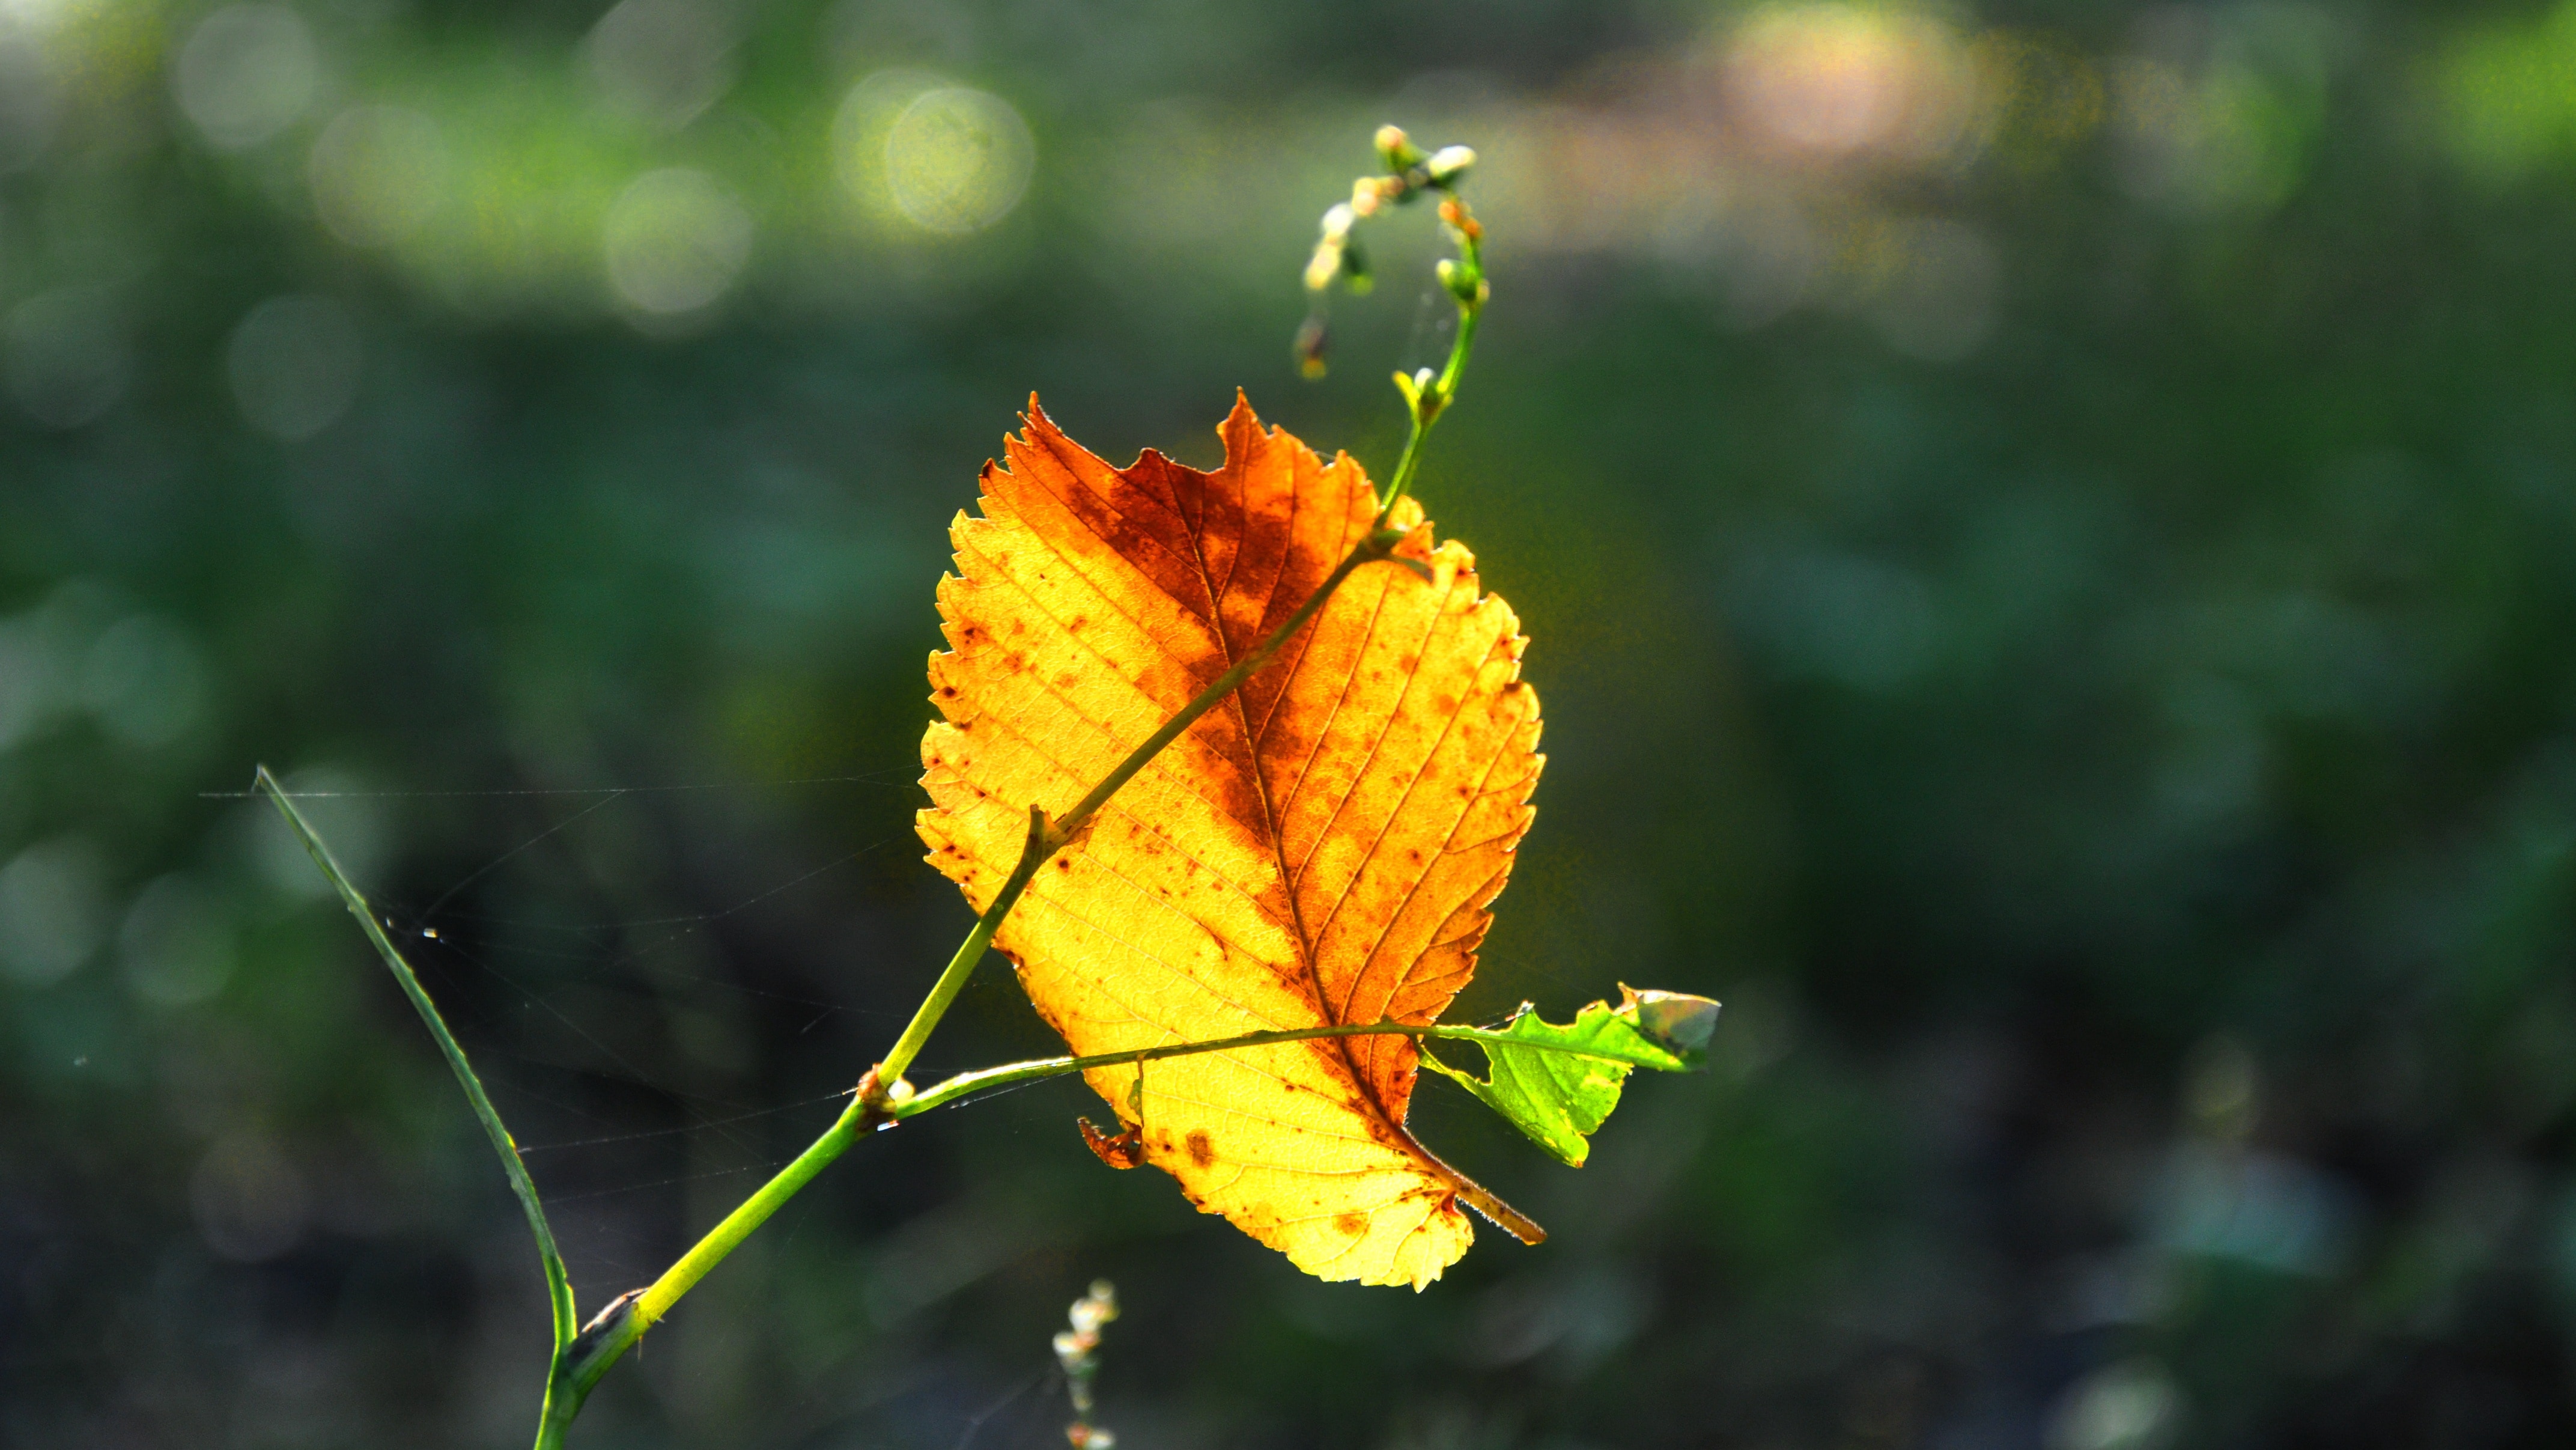 brown leaf on green plant at daytime